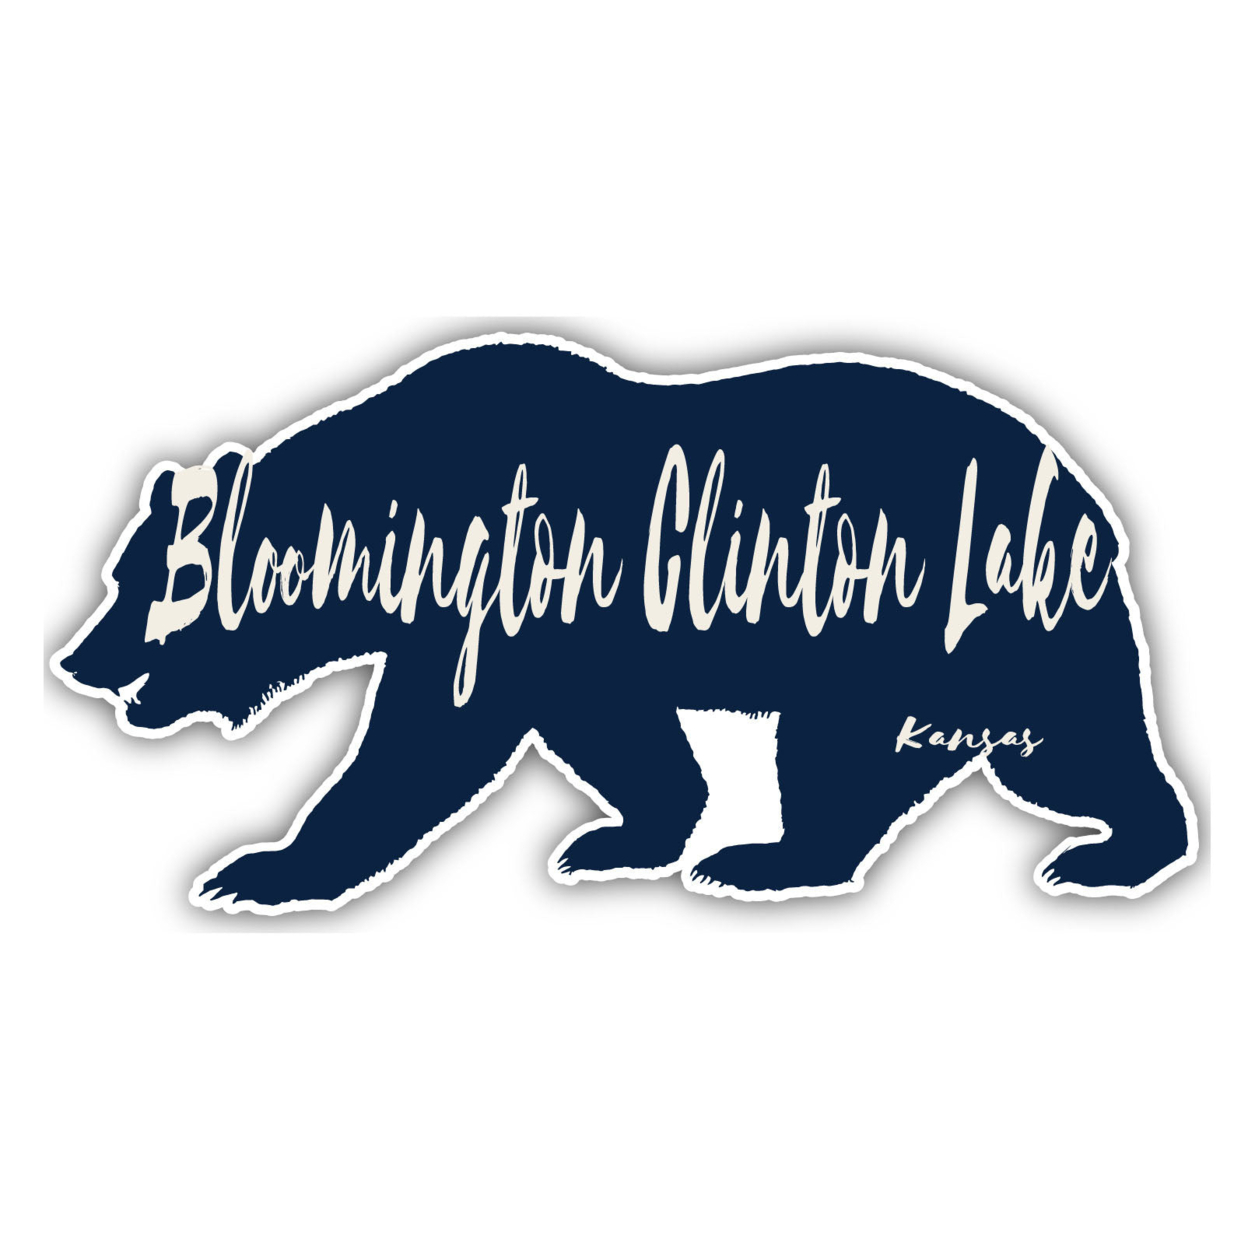 Bloomington Clinton Lake Kansas Souvenir Decorative Stickers (Choose Theme And Size) - Single Unit, 2-Inch, Bear